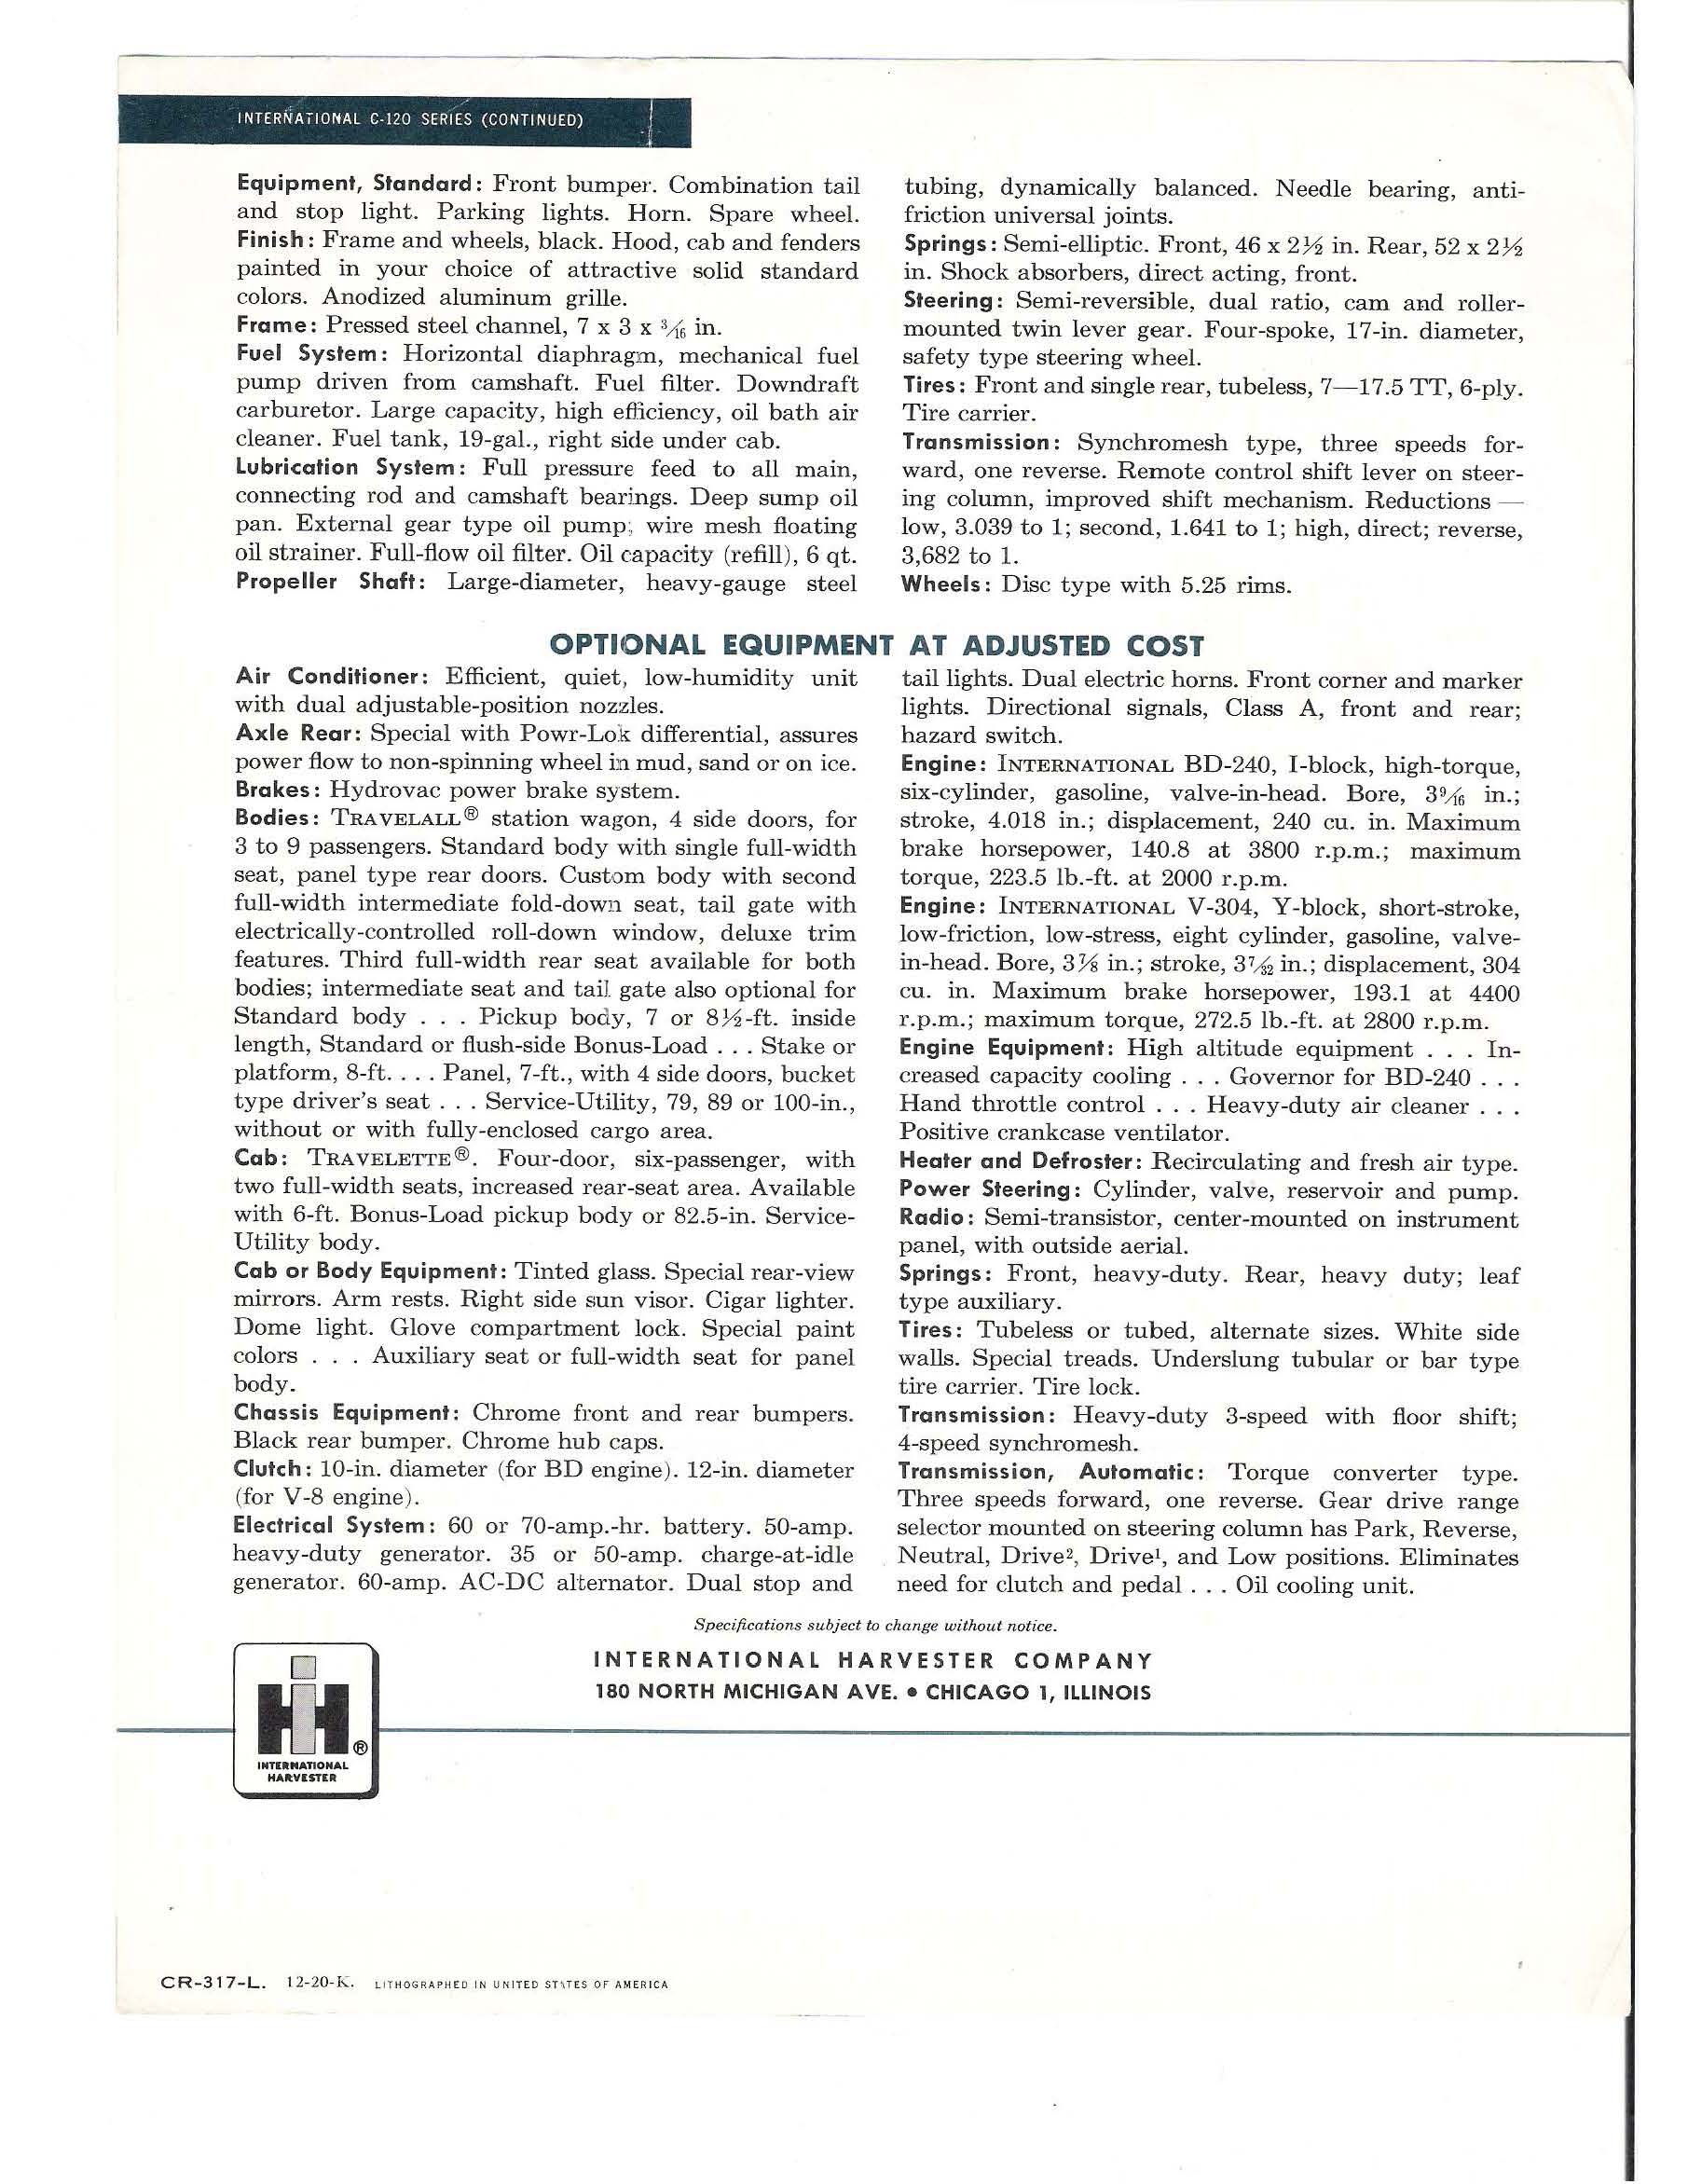 1961 International C-120 Series Folder Page 1